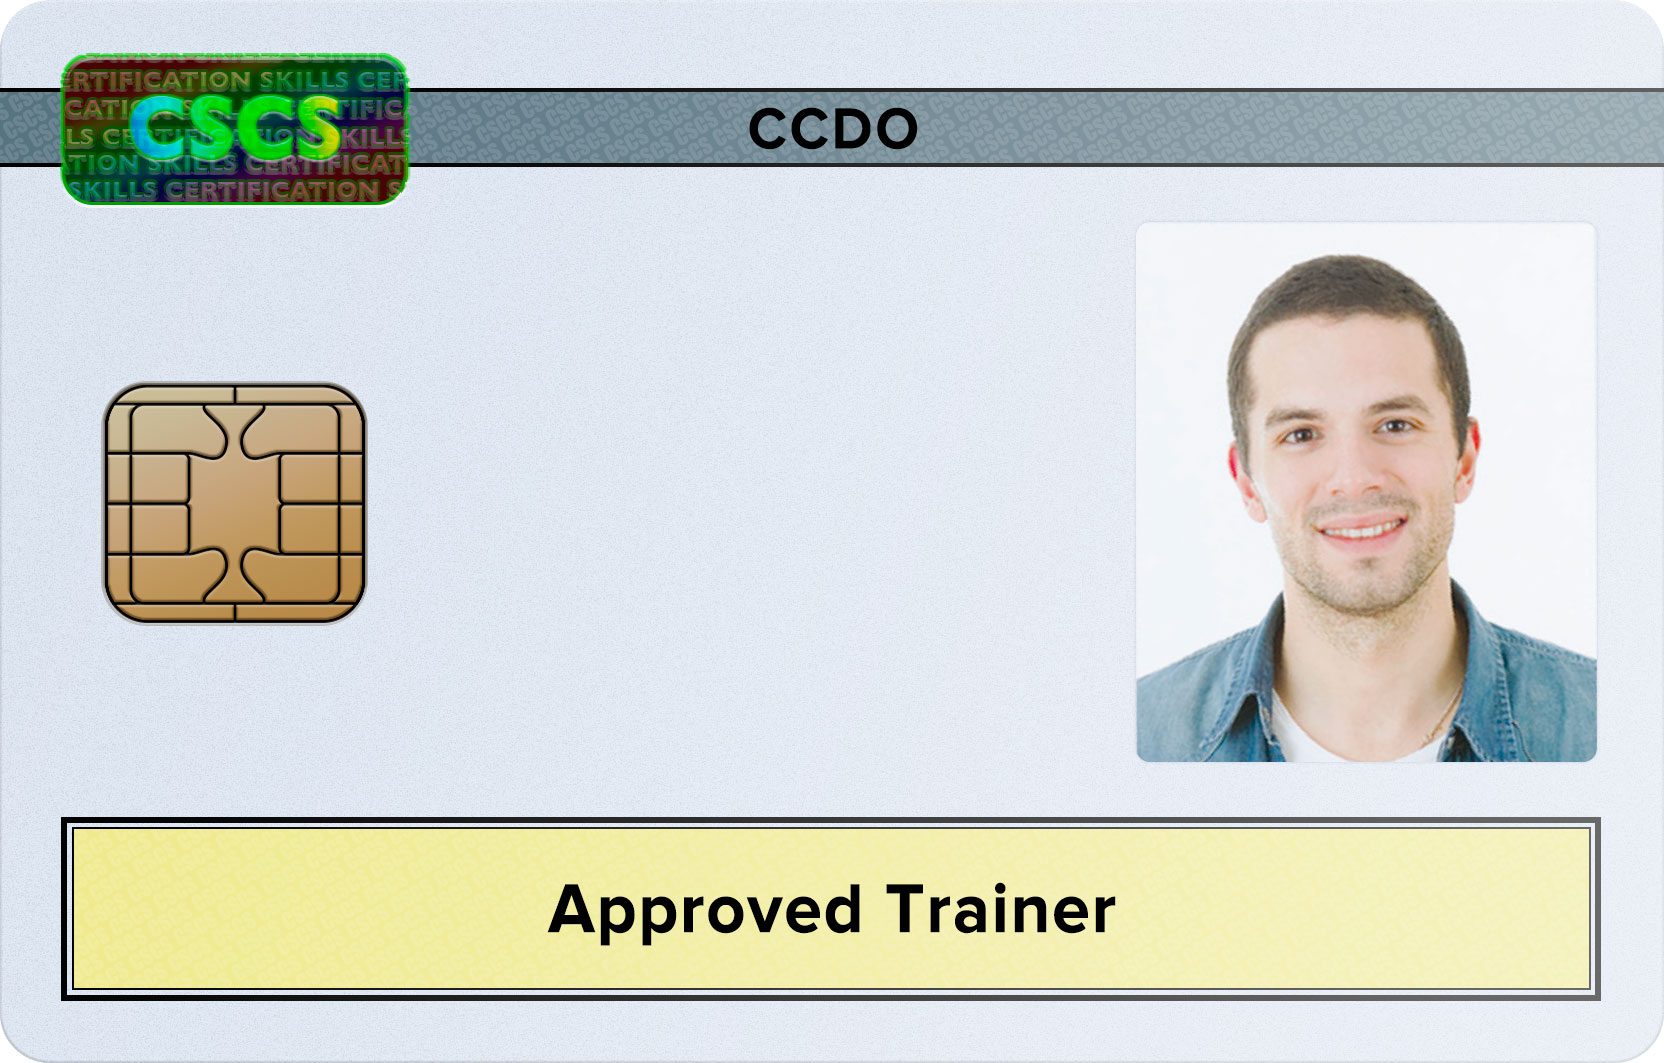 NDTG Approved Trainer